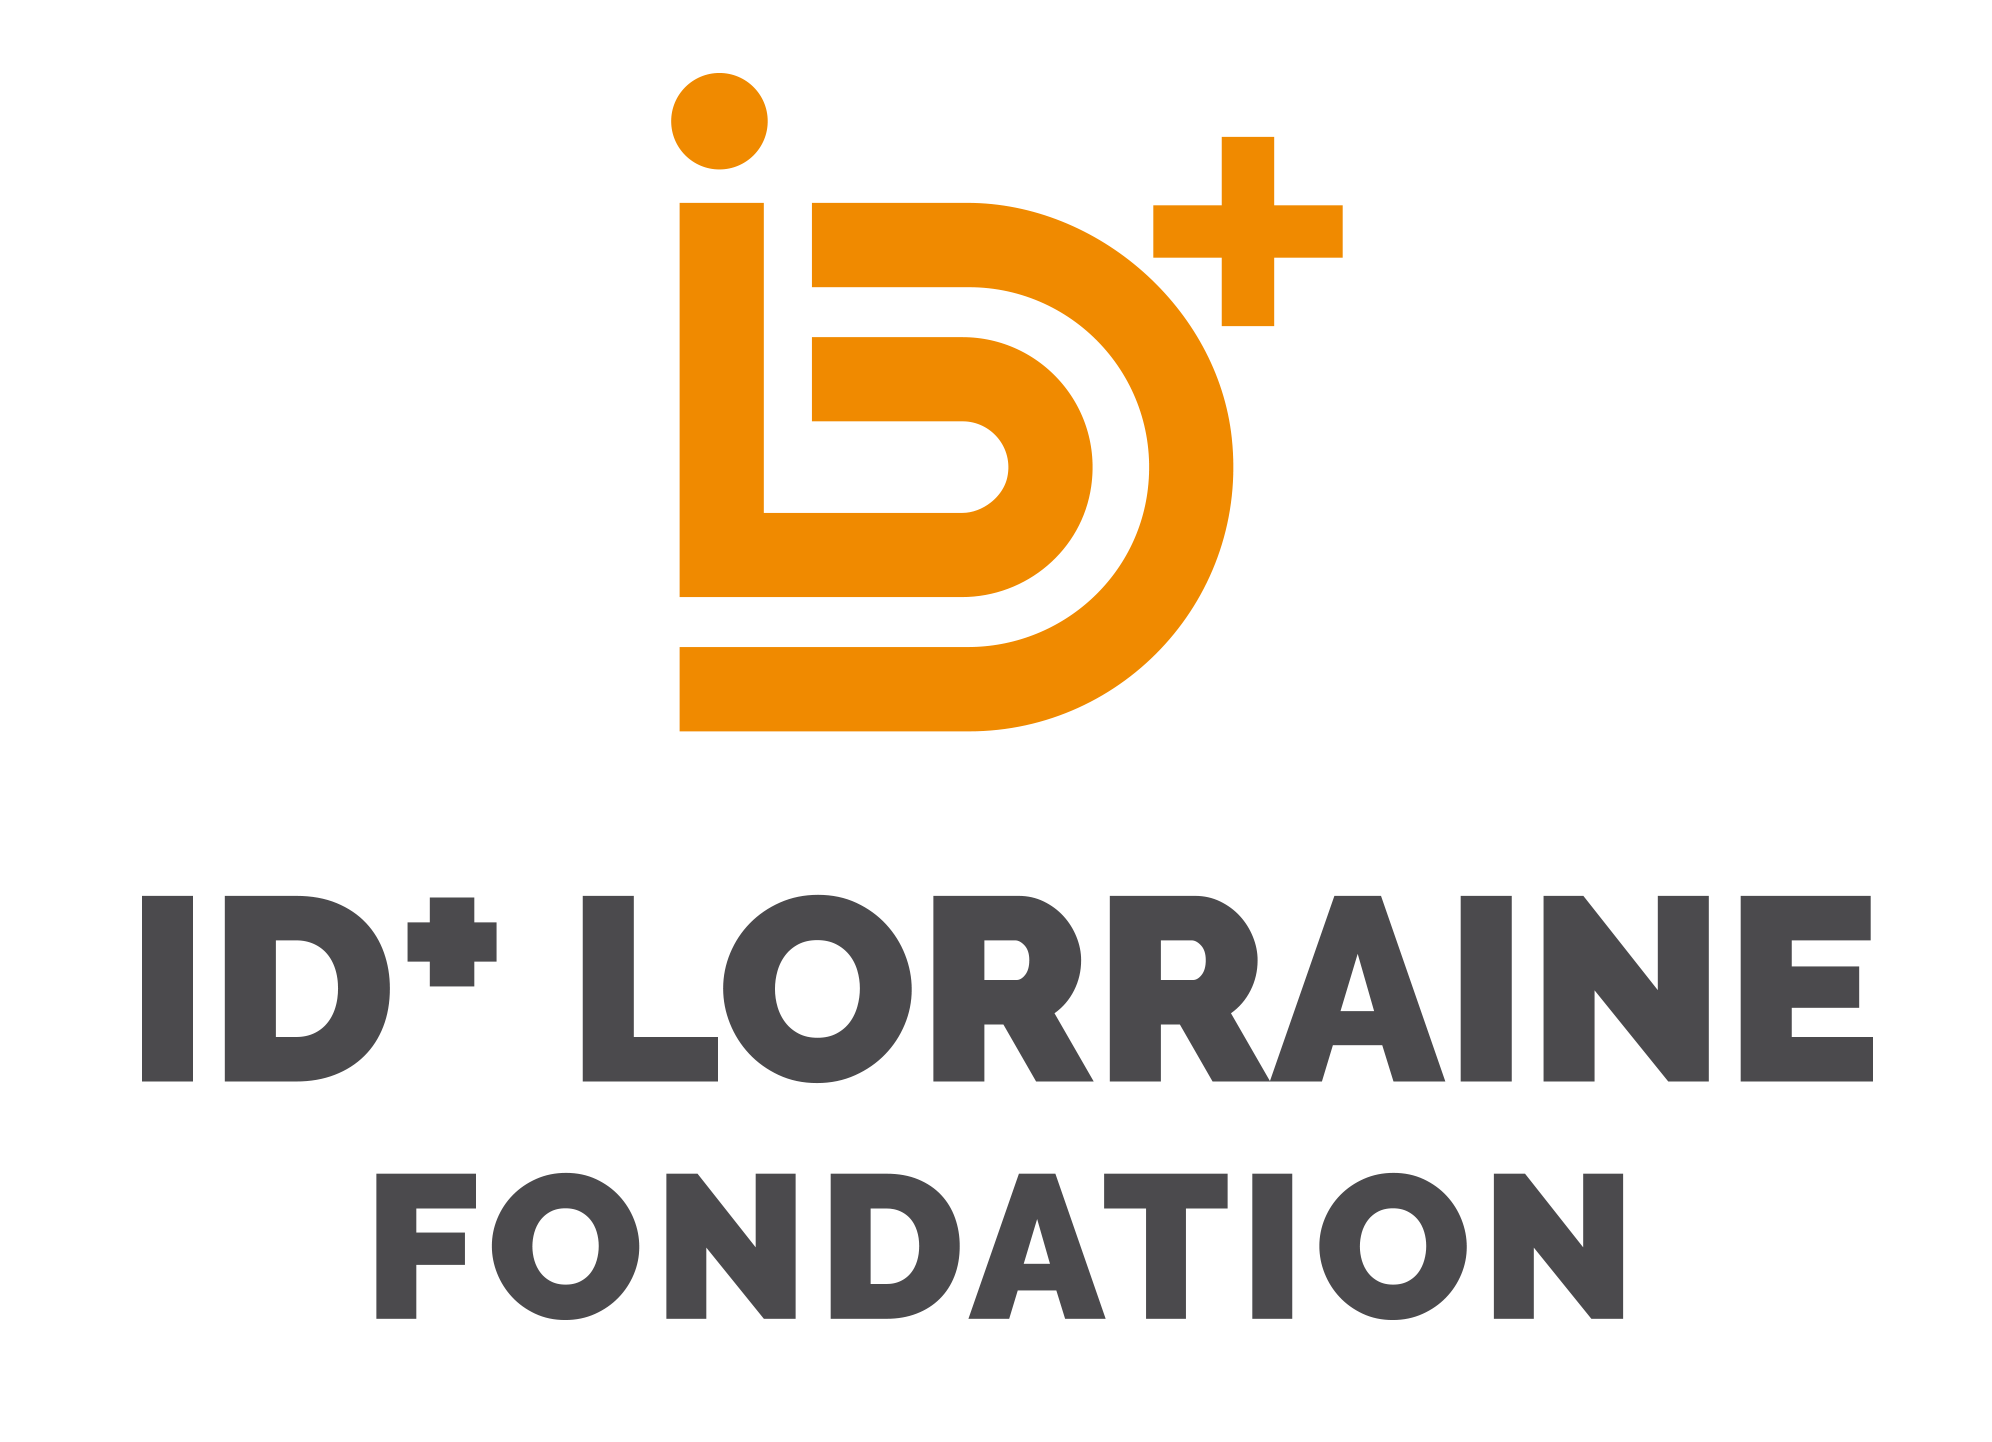 Fondation ID+ Lorraine